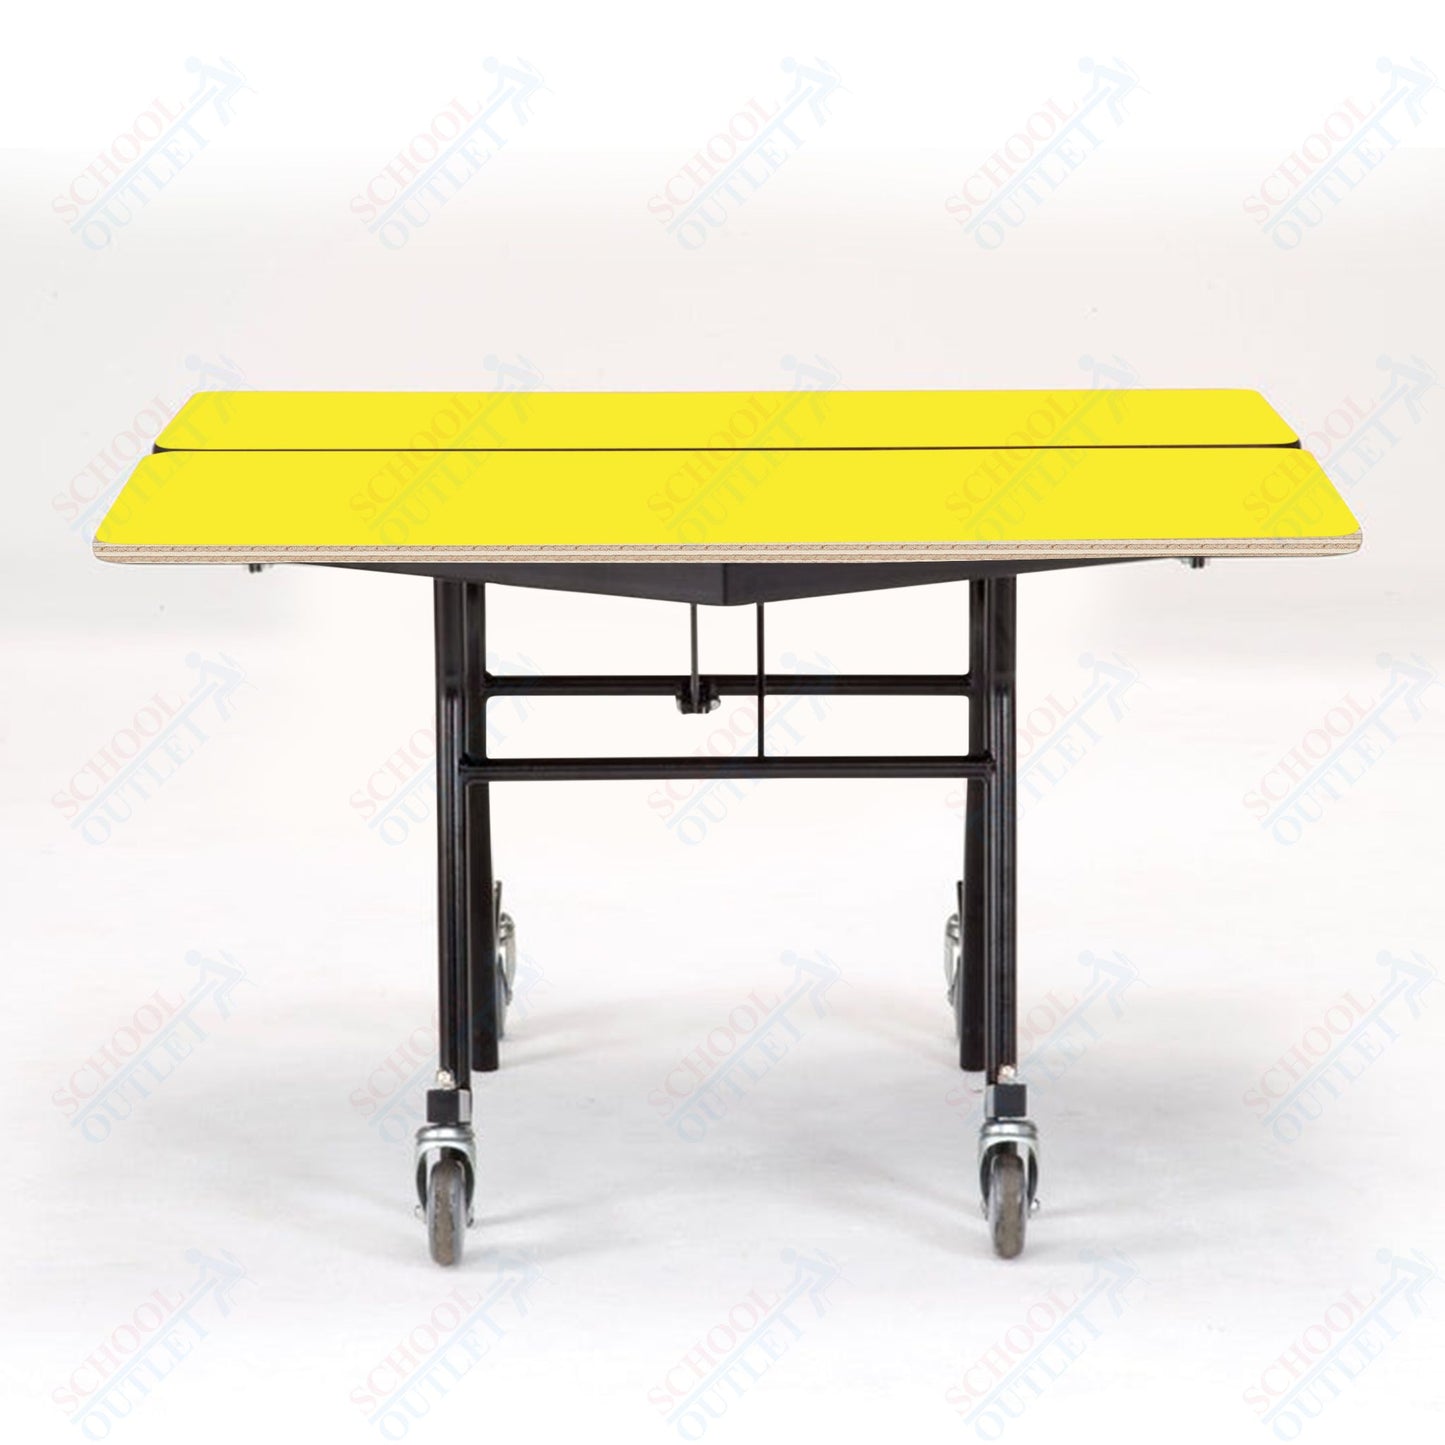 NPS Mobile Cafeteria Square Table Shape Unit - 48" W x 48" L (National Public Seating NPS-MT48Q)